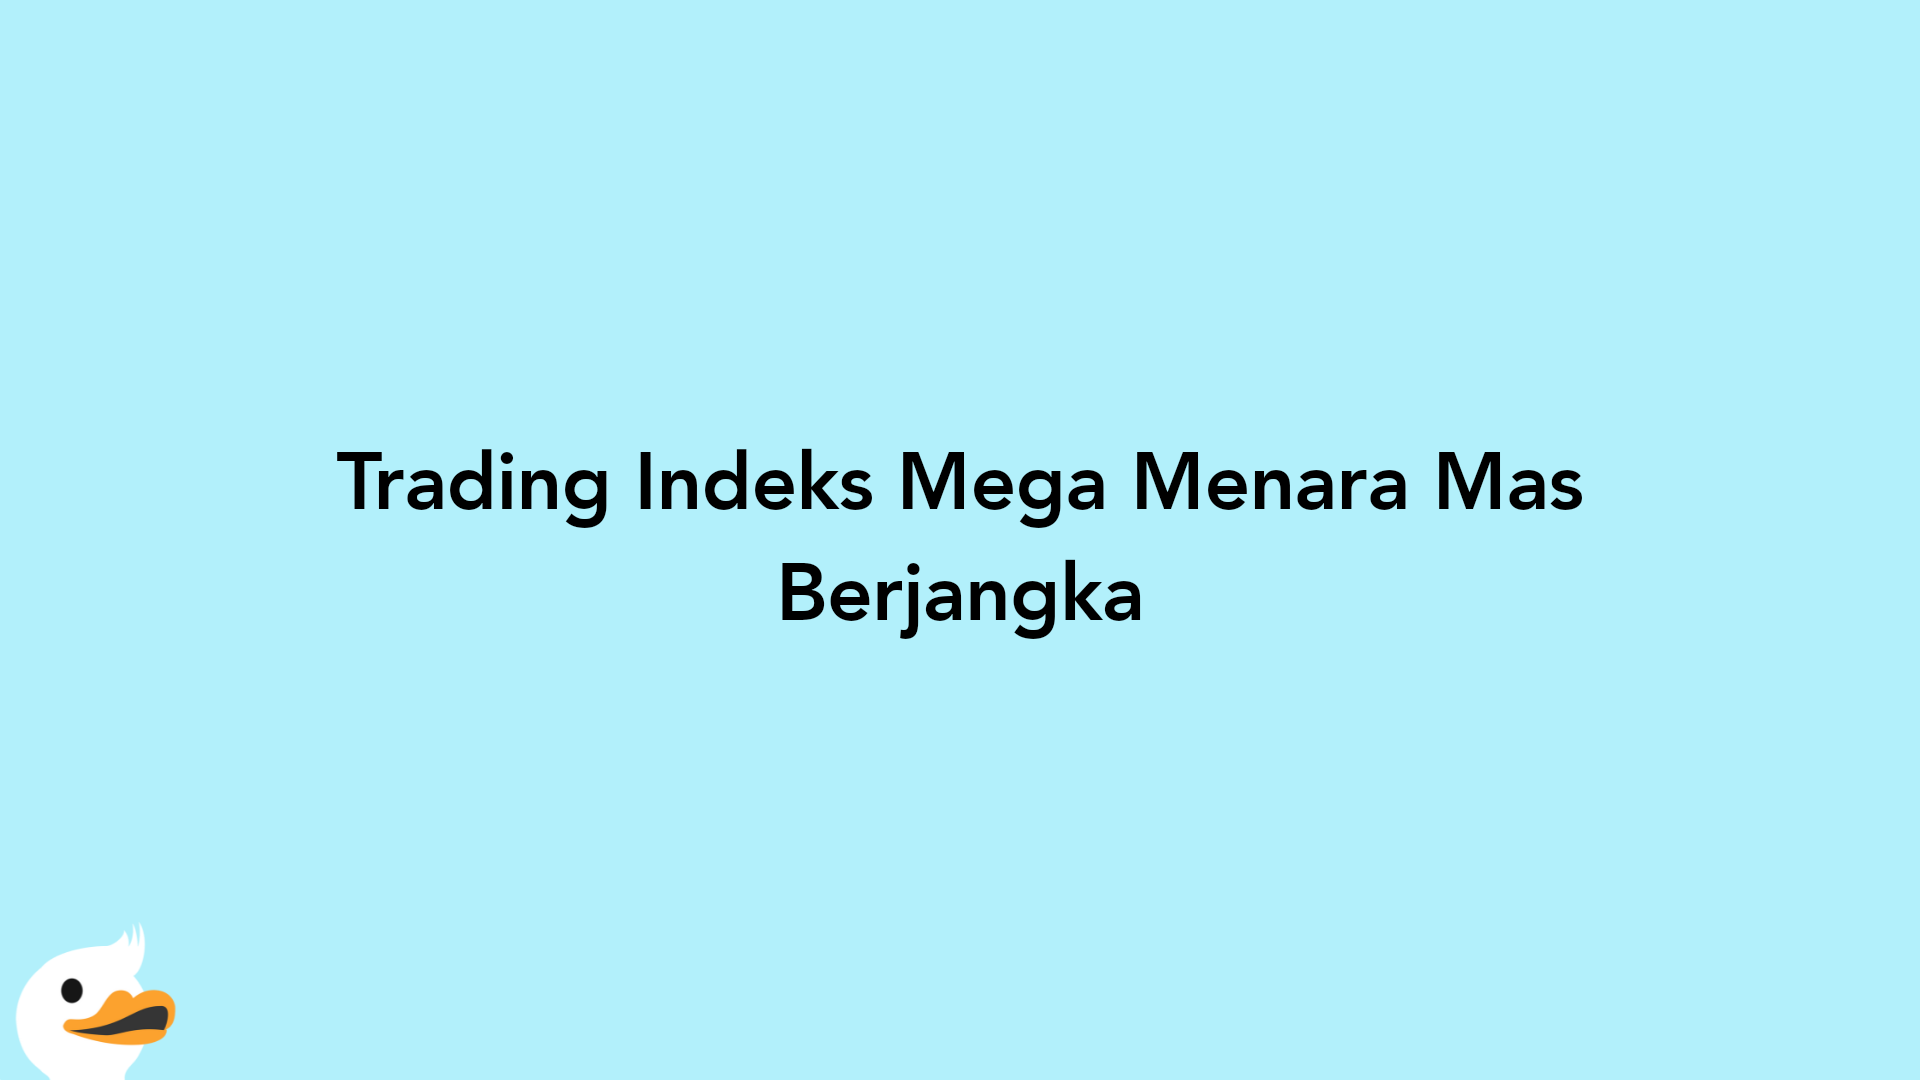 Trading Indeks Mega Menara Mas Berjangka